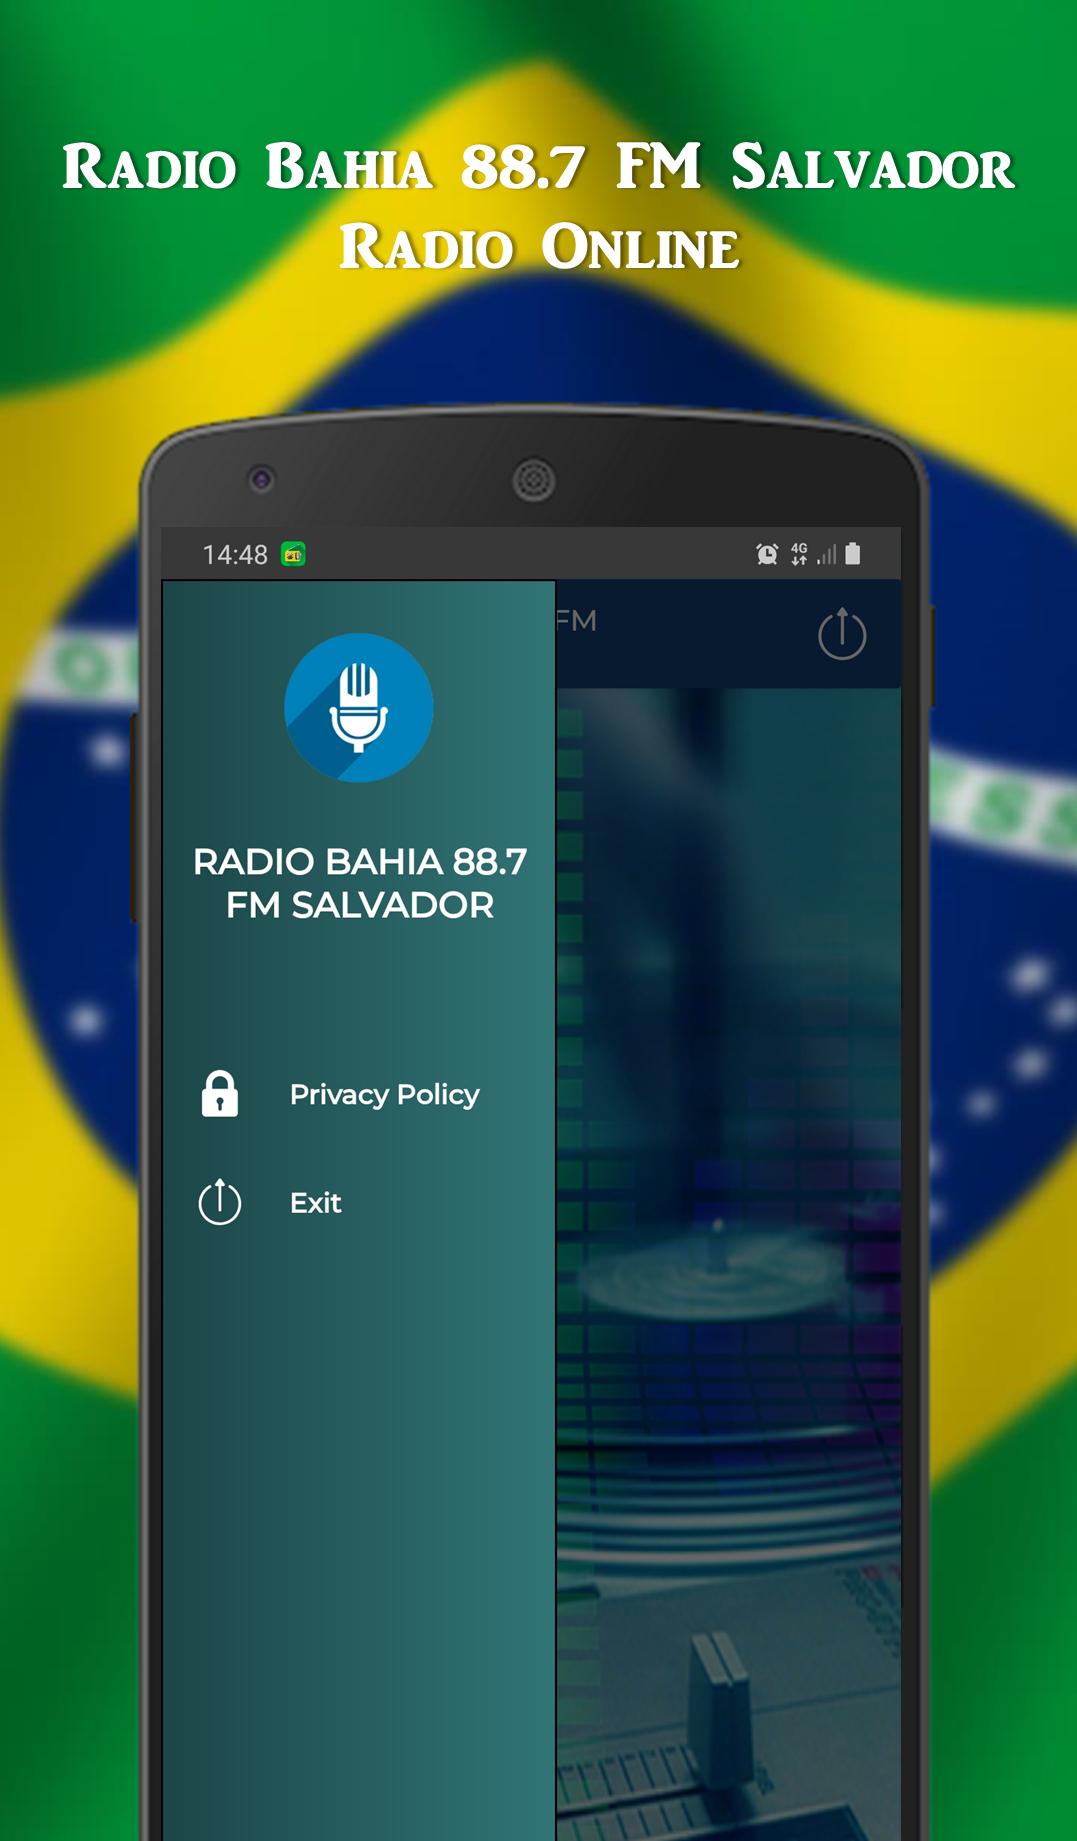 Radio Bahia 88.7 FM Salvador - Radio Online for Android - APK Download